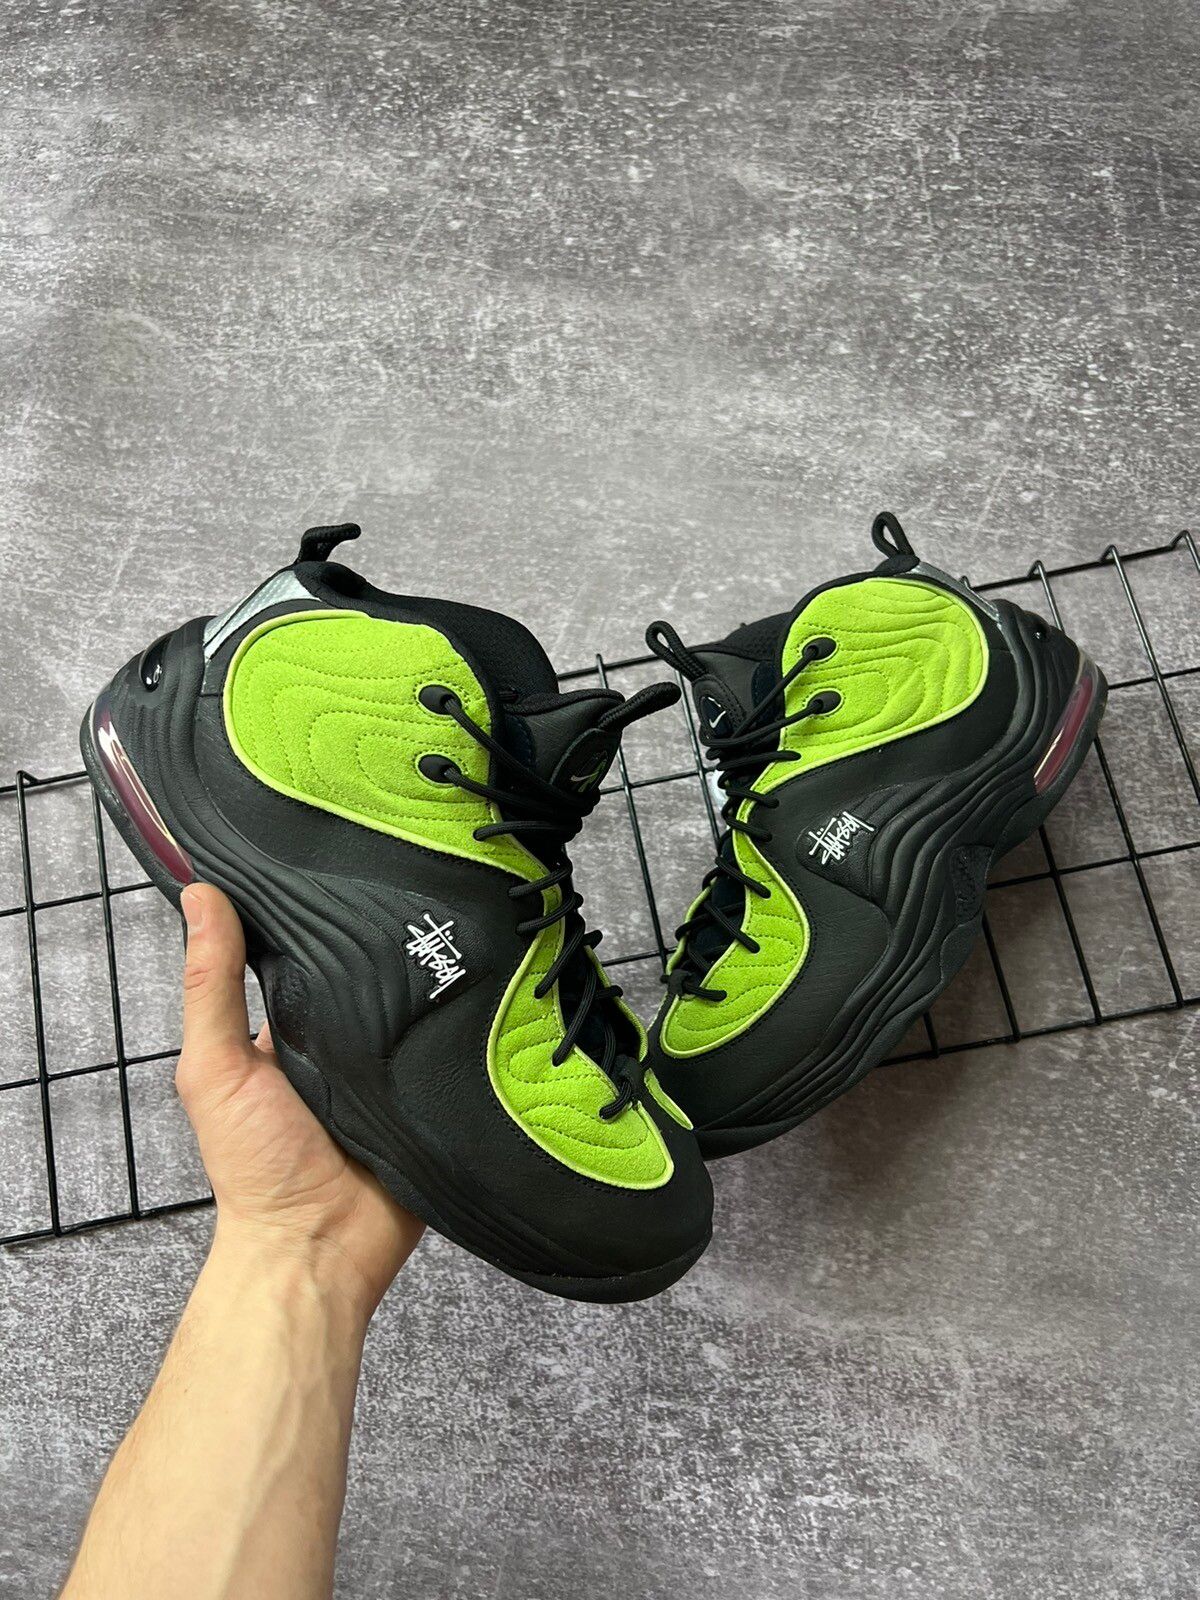 Pre-owned Nike X Stussy Nike Air Penny 2 Vivid Green Black Shoes